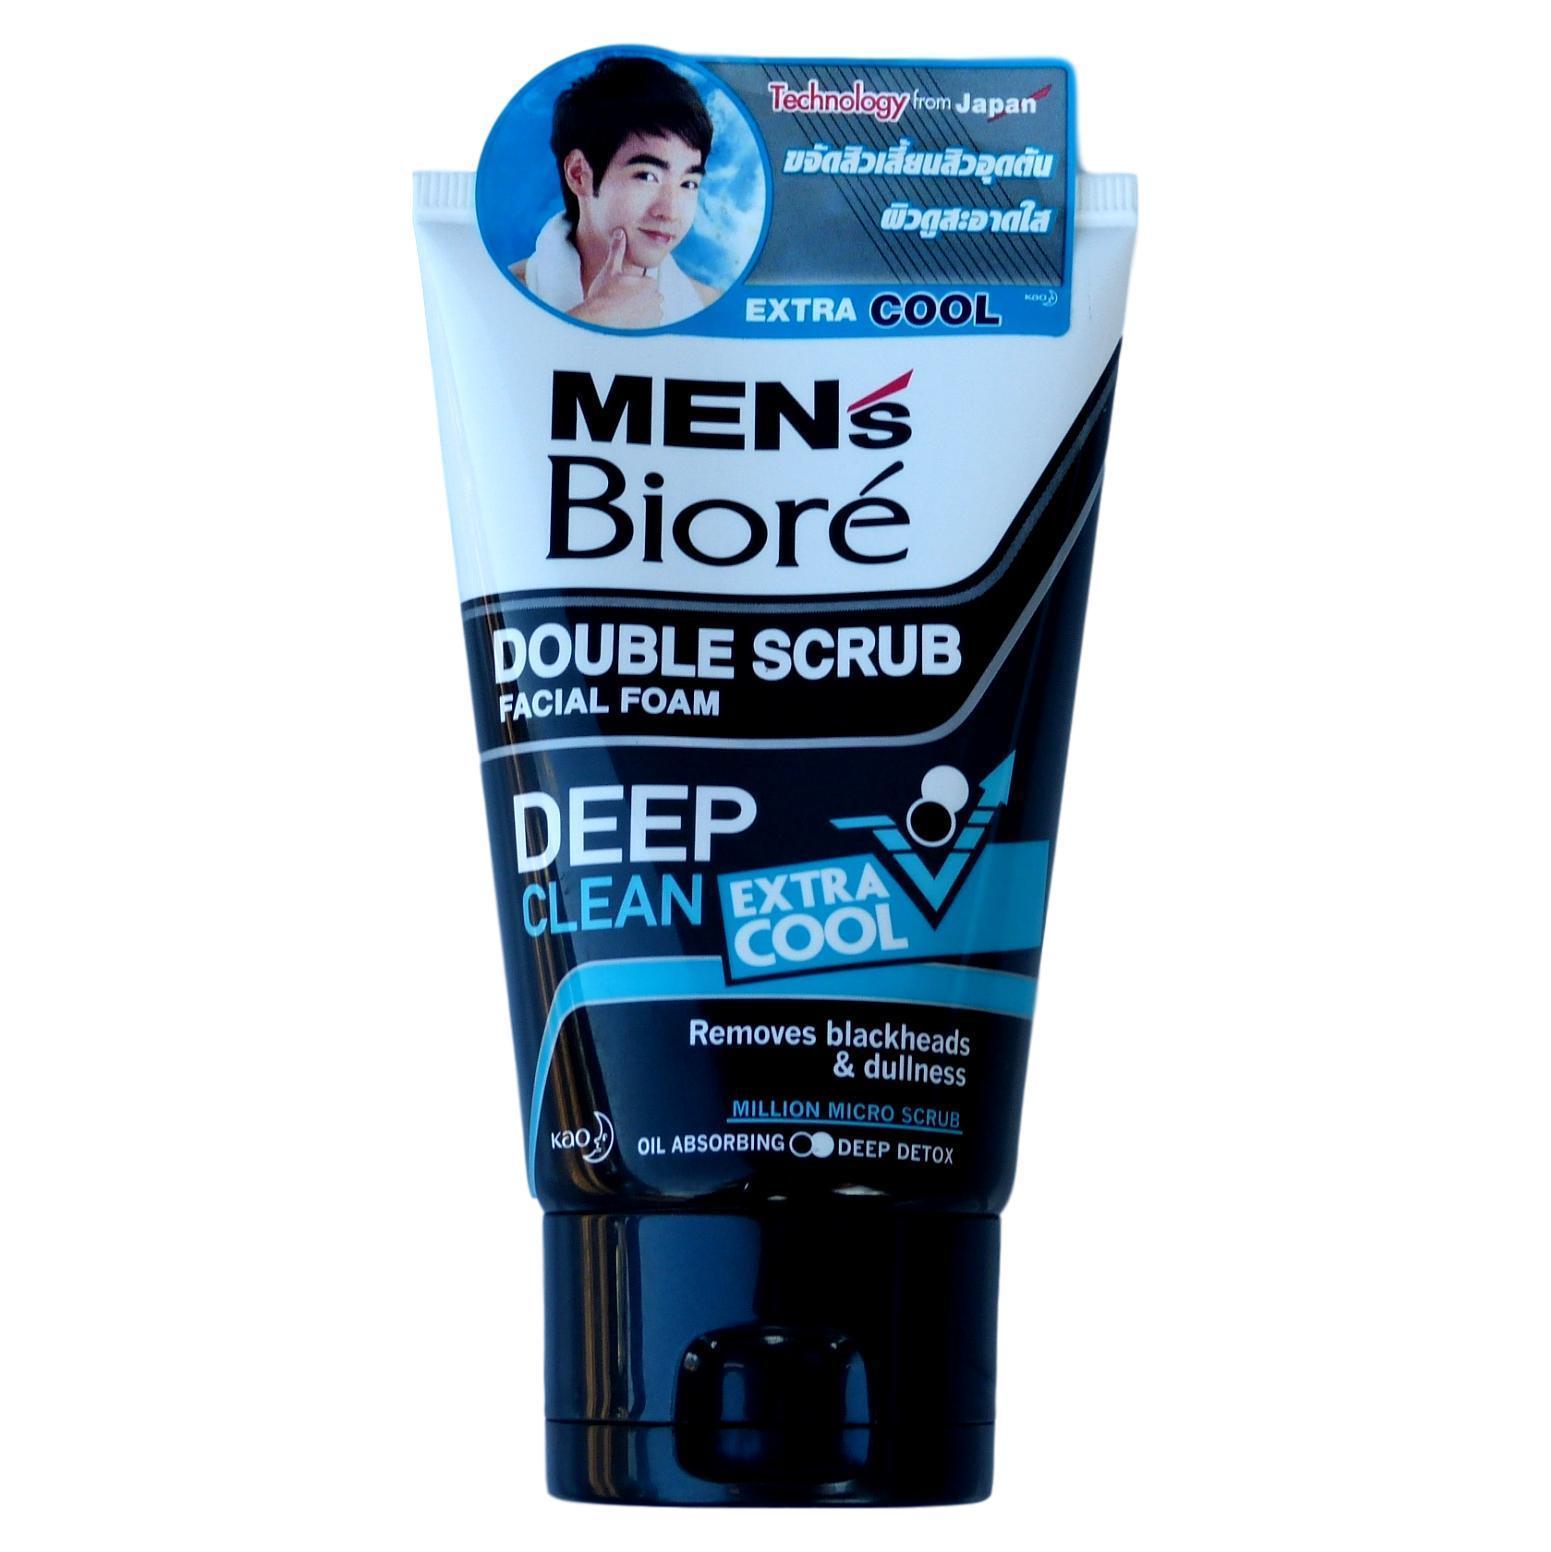 Men's Biore Double Scrub Deep Clean Extra Cool Facial Foam 100g - Asian Beauty Supply